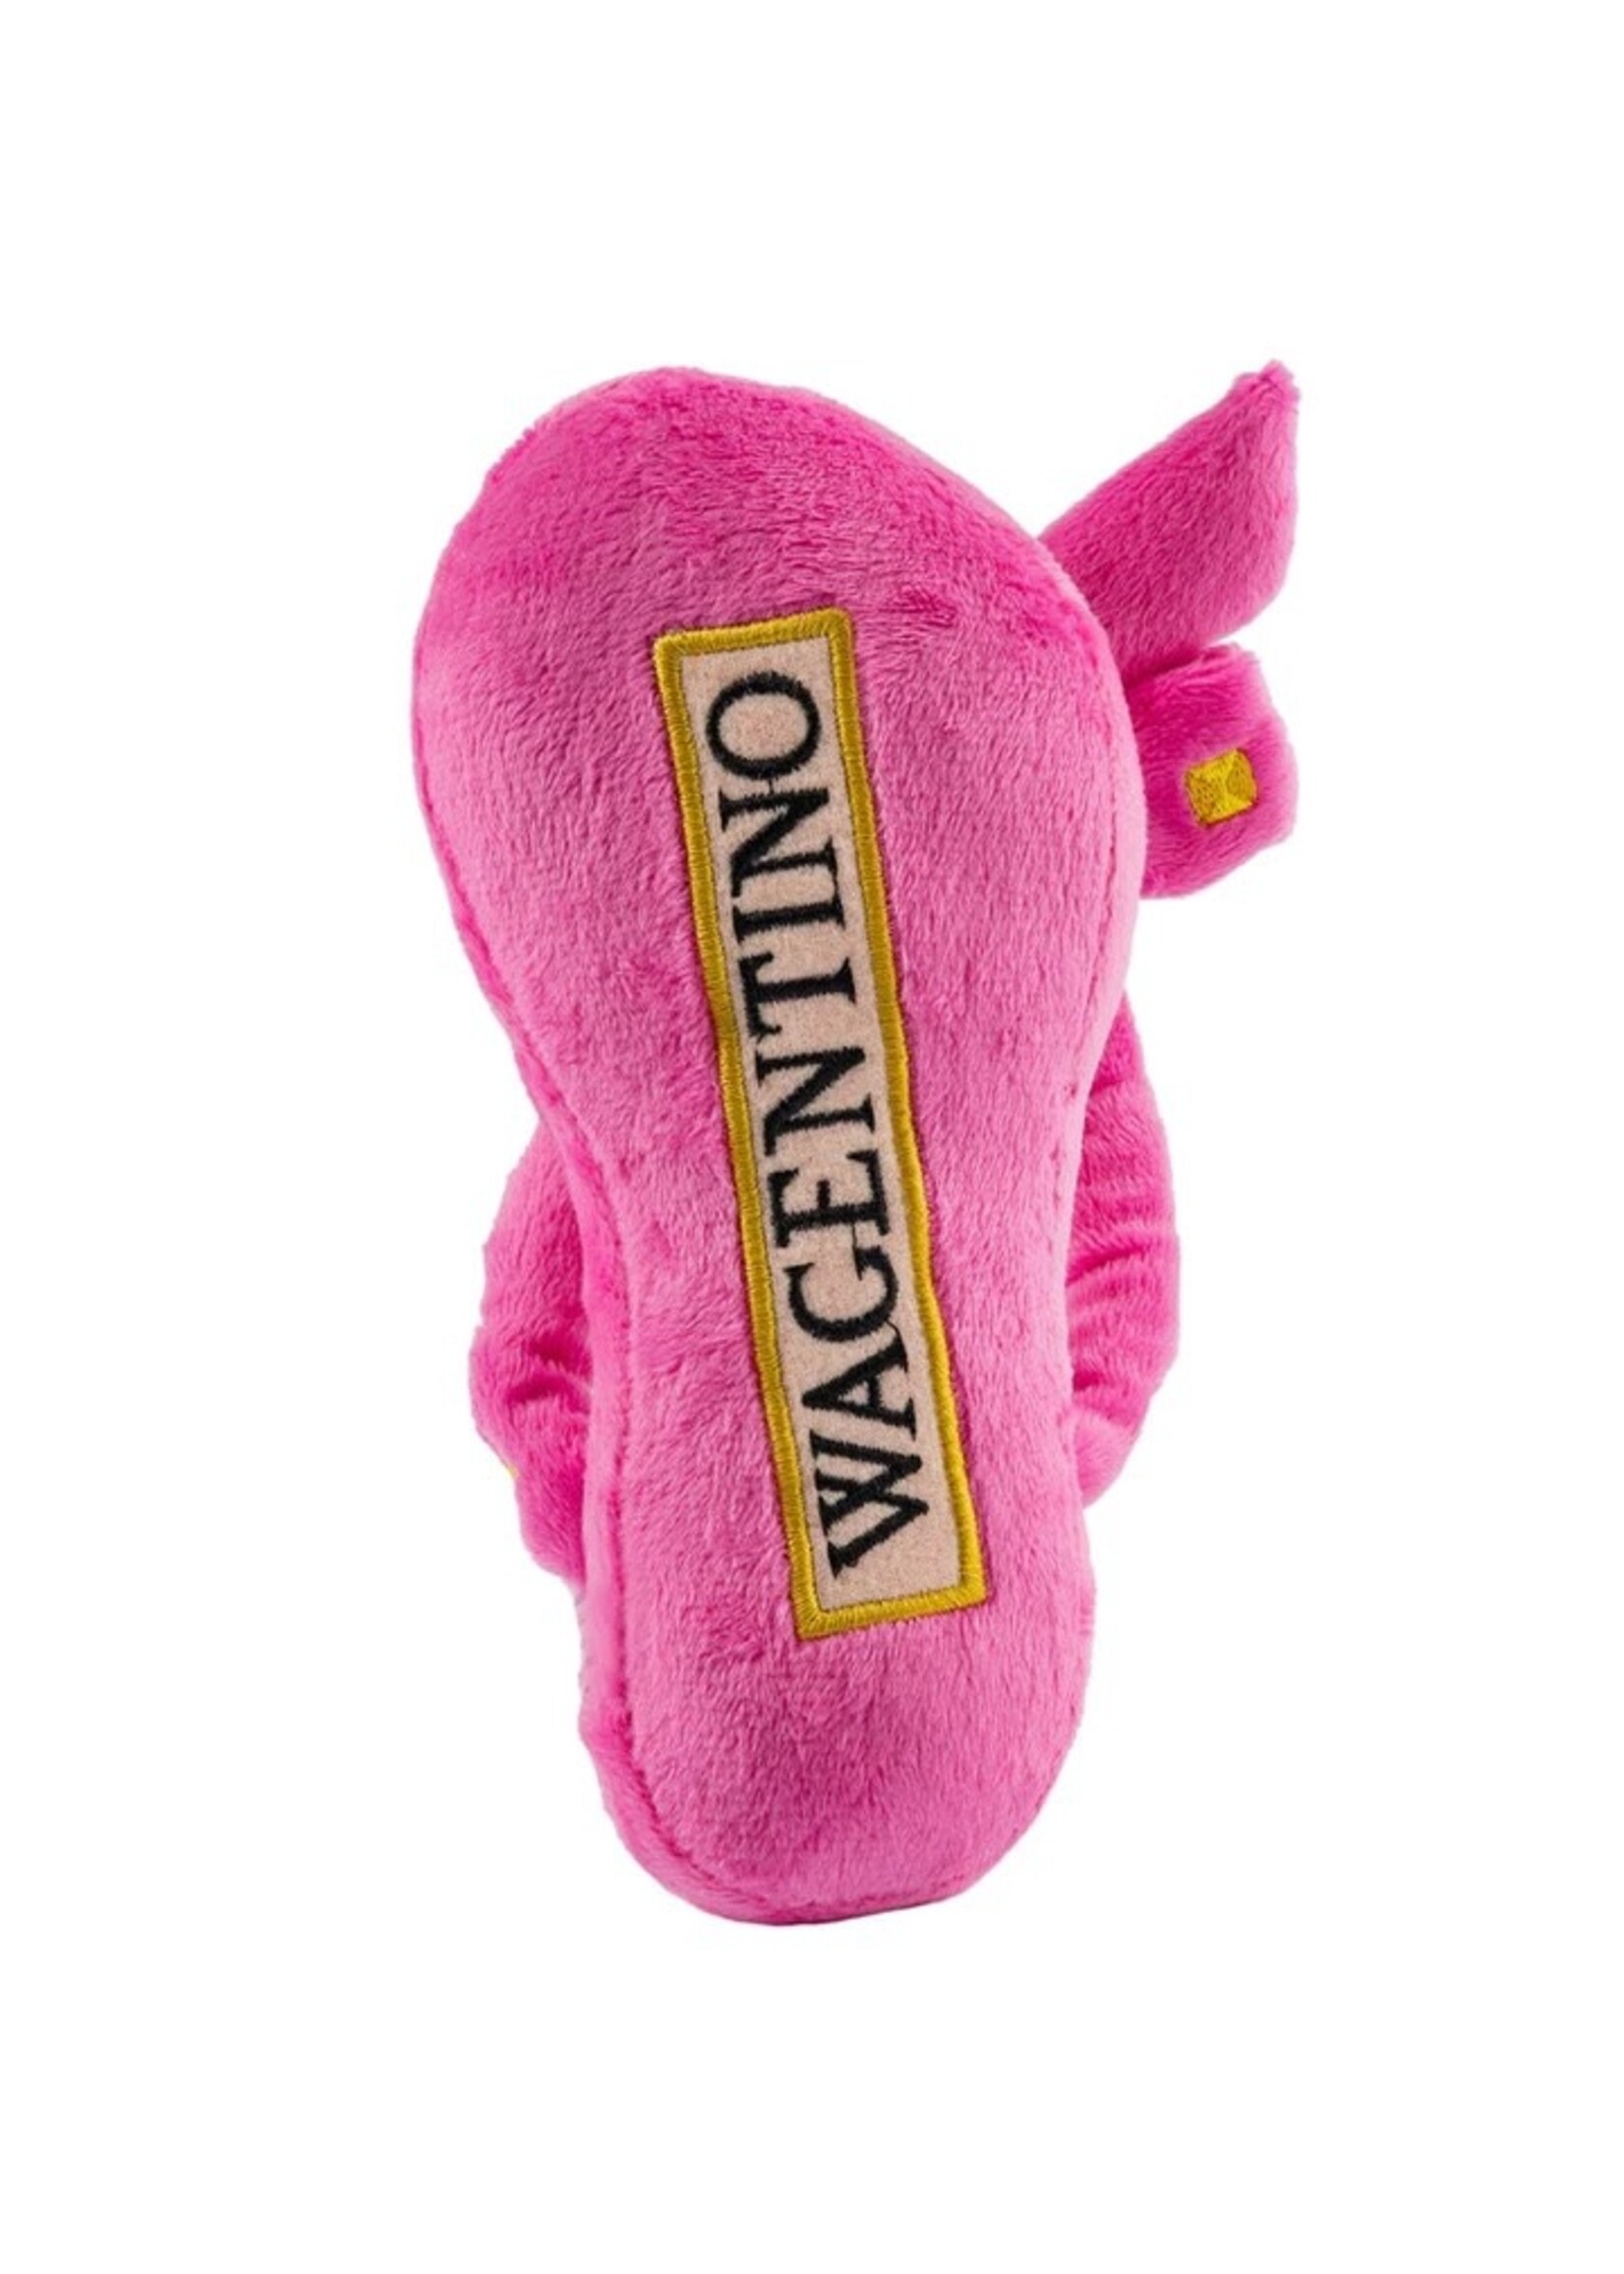 Haute Diggity Dog Wagentino Sandal Squeaker Dog Toy